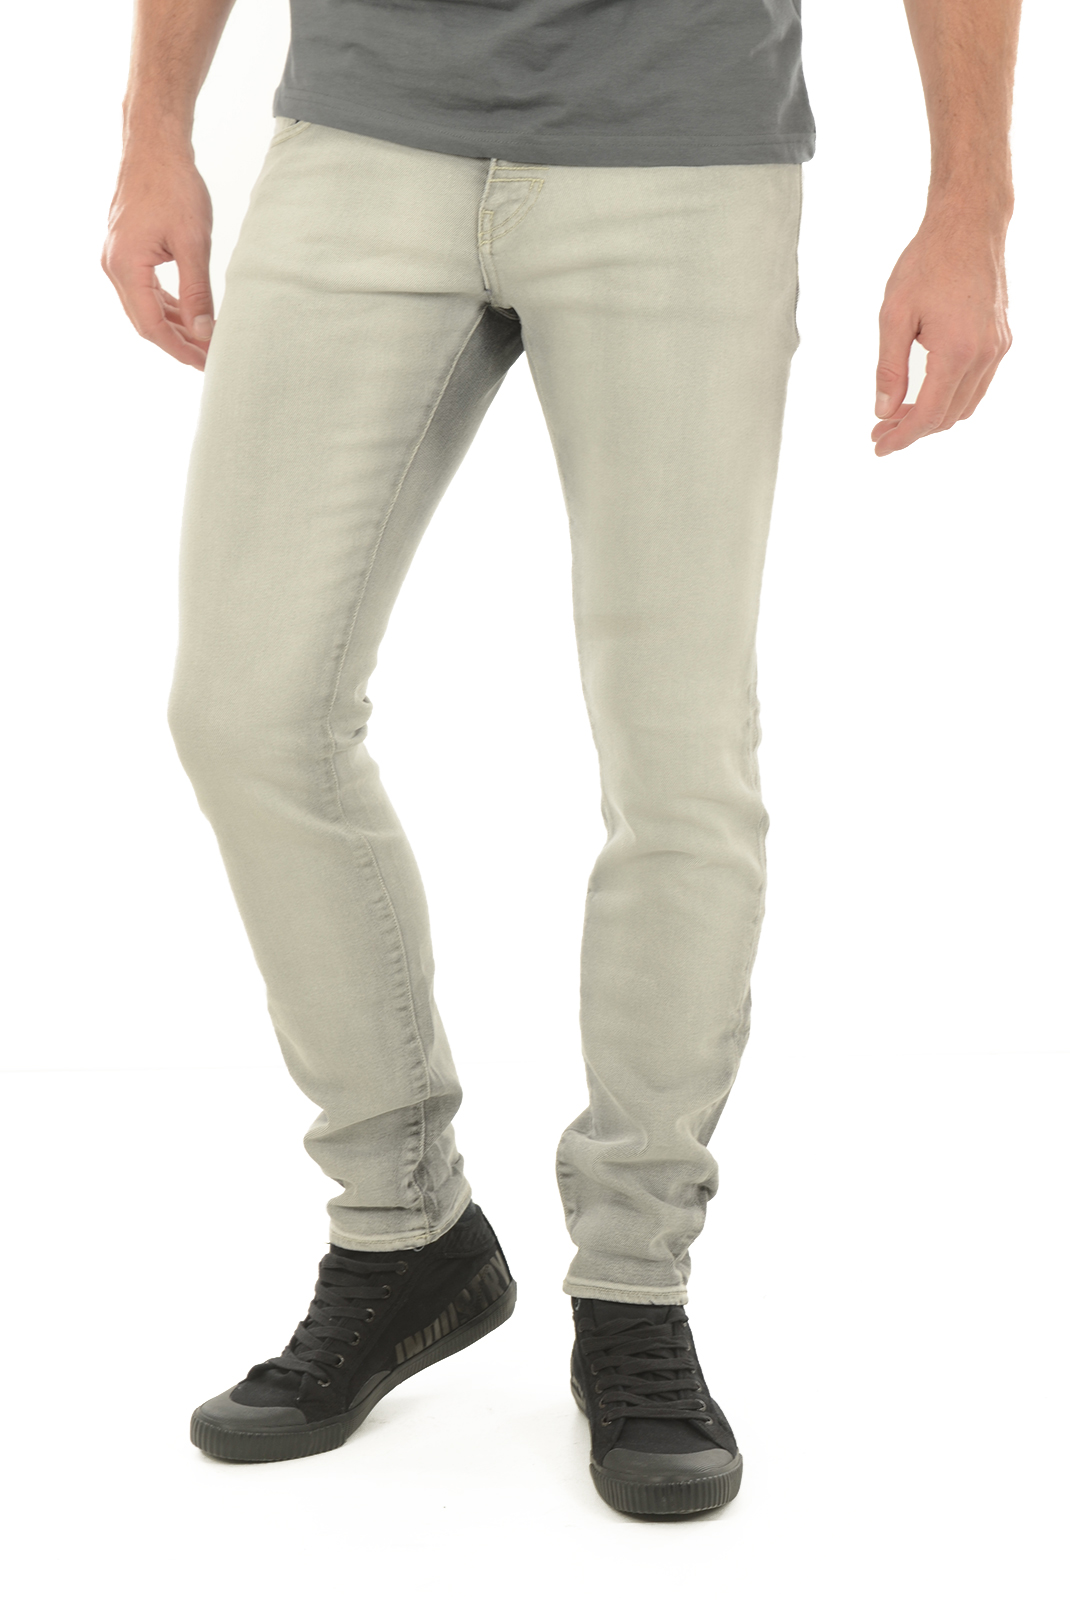 Jeans gris skinny stretch pour homme Meltin'pot  - Meret D1573